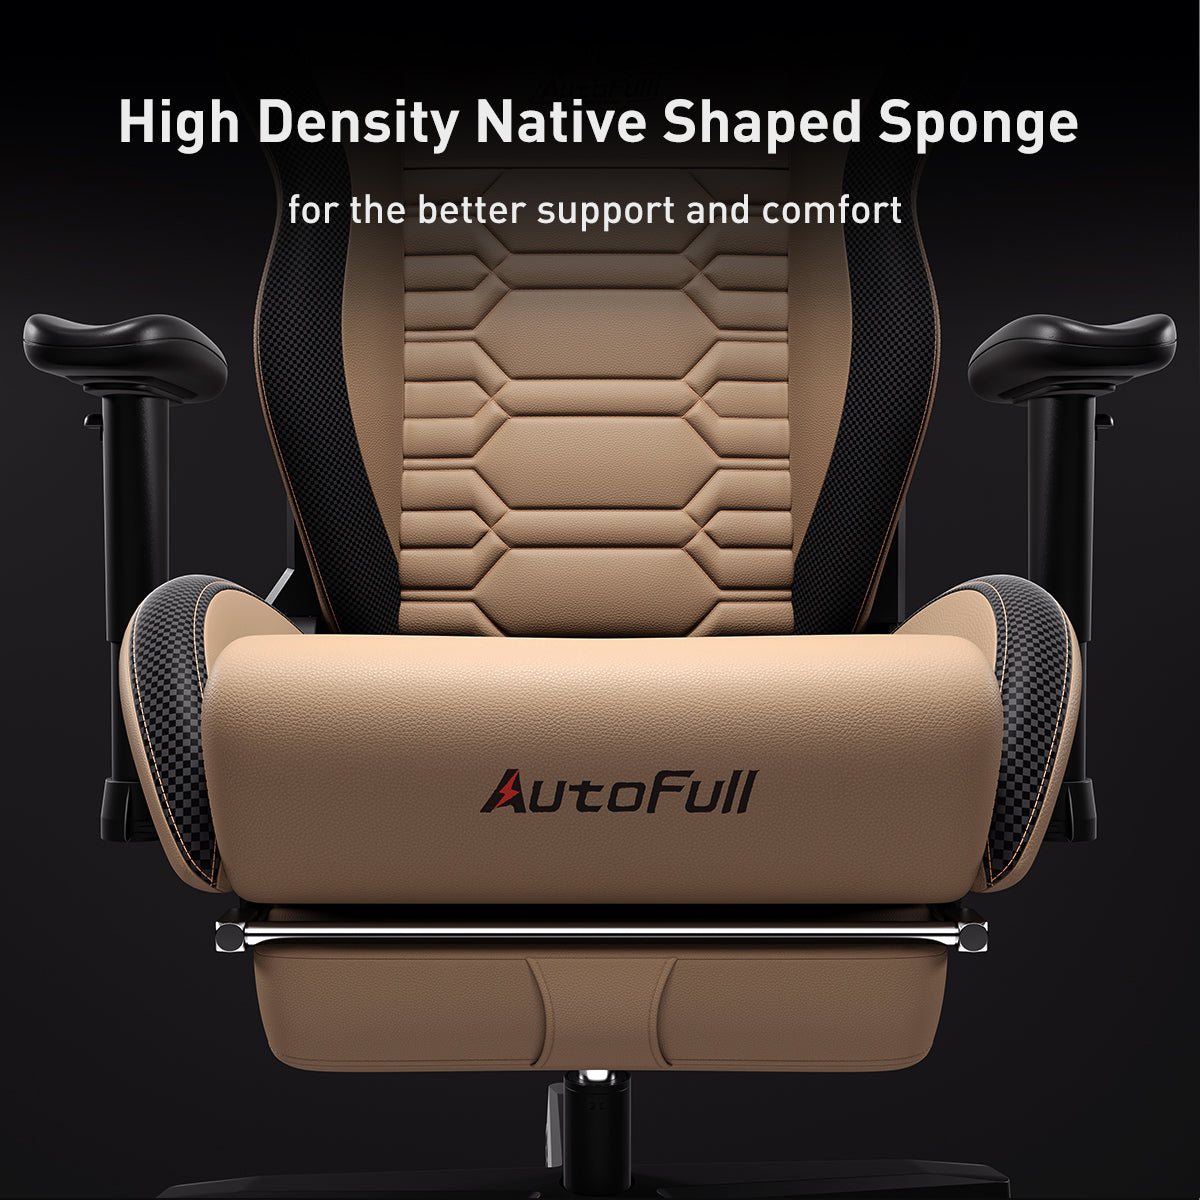 AutoFull C3 Gaming Chair Brown